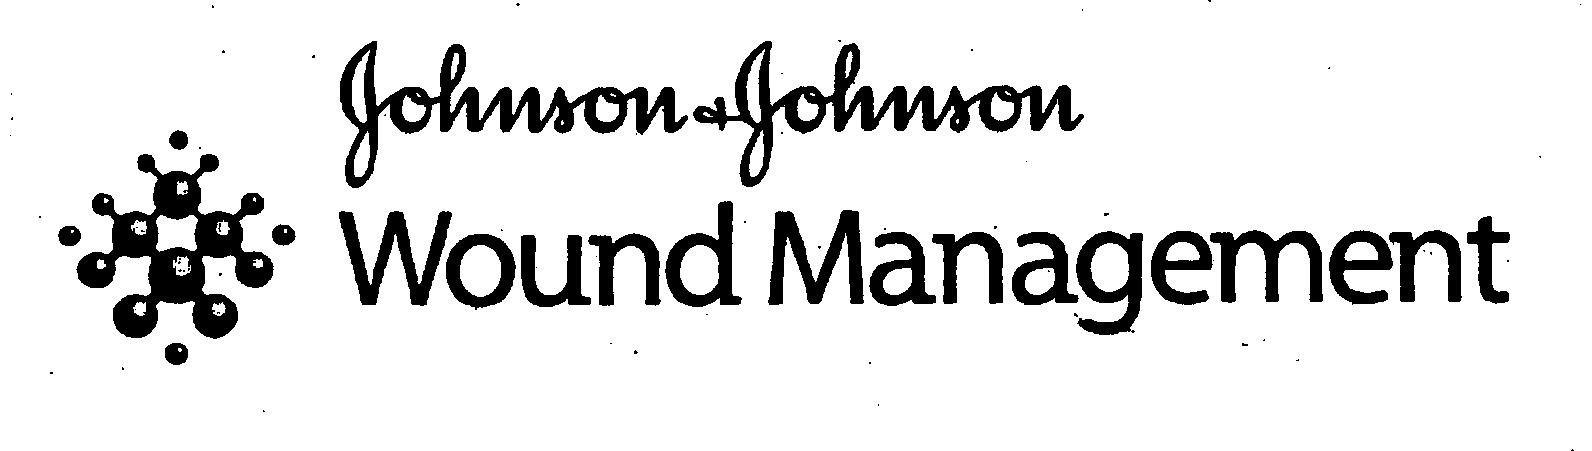  JOHNSON &amp; JOHNSON WOUND MANAGEMENT